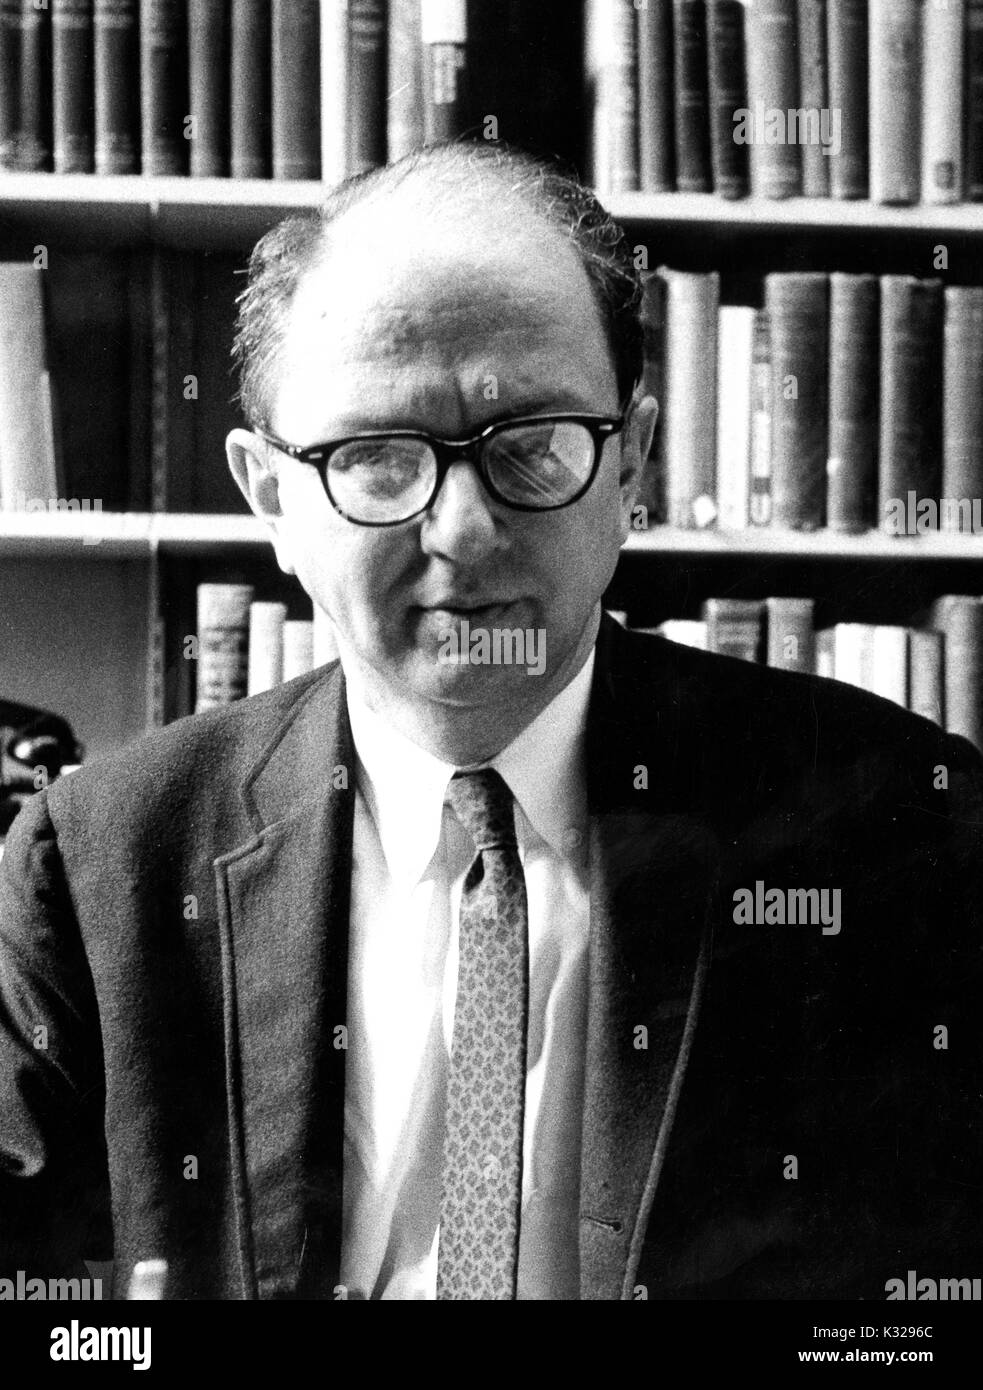 Portrait of American historian and biographer David Herbert Donald sitting in front of bookshelves, 1963. Stock Photo